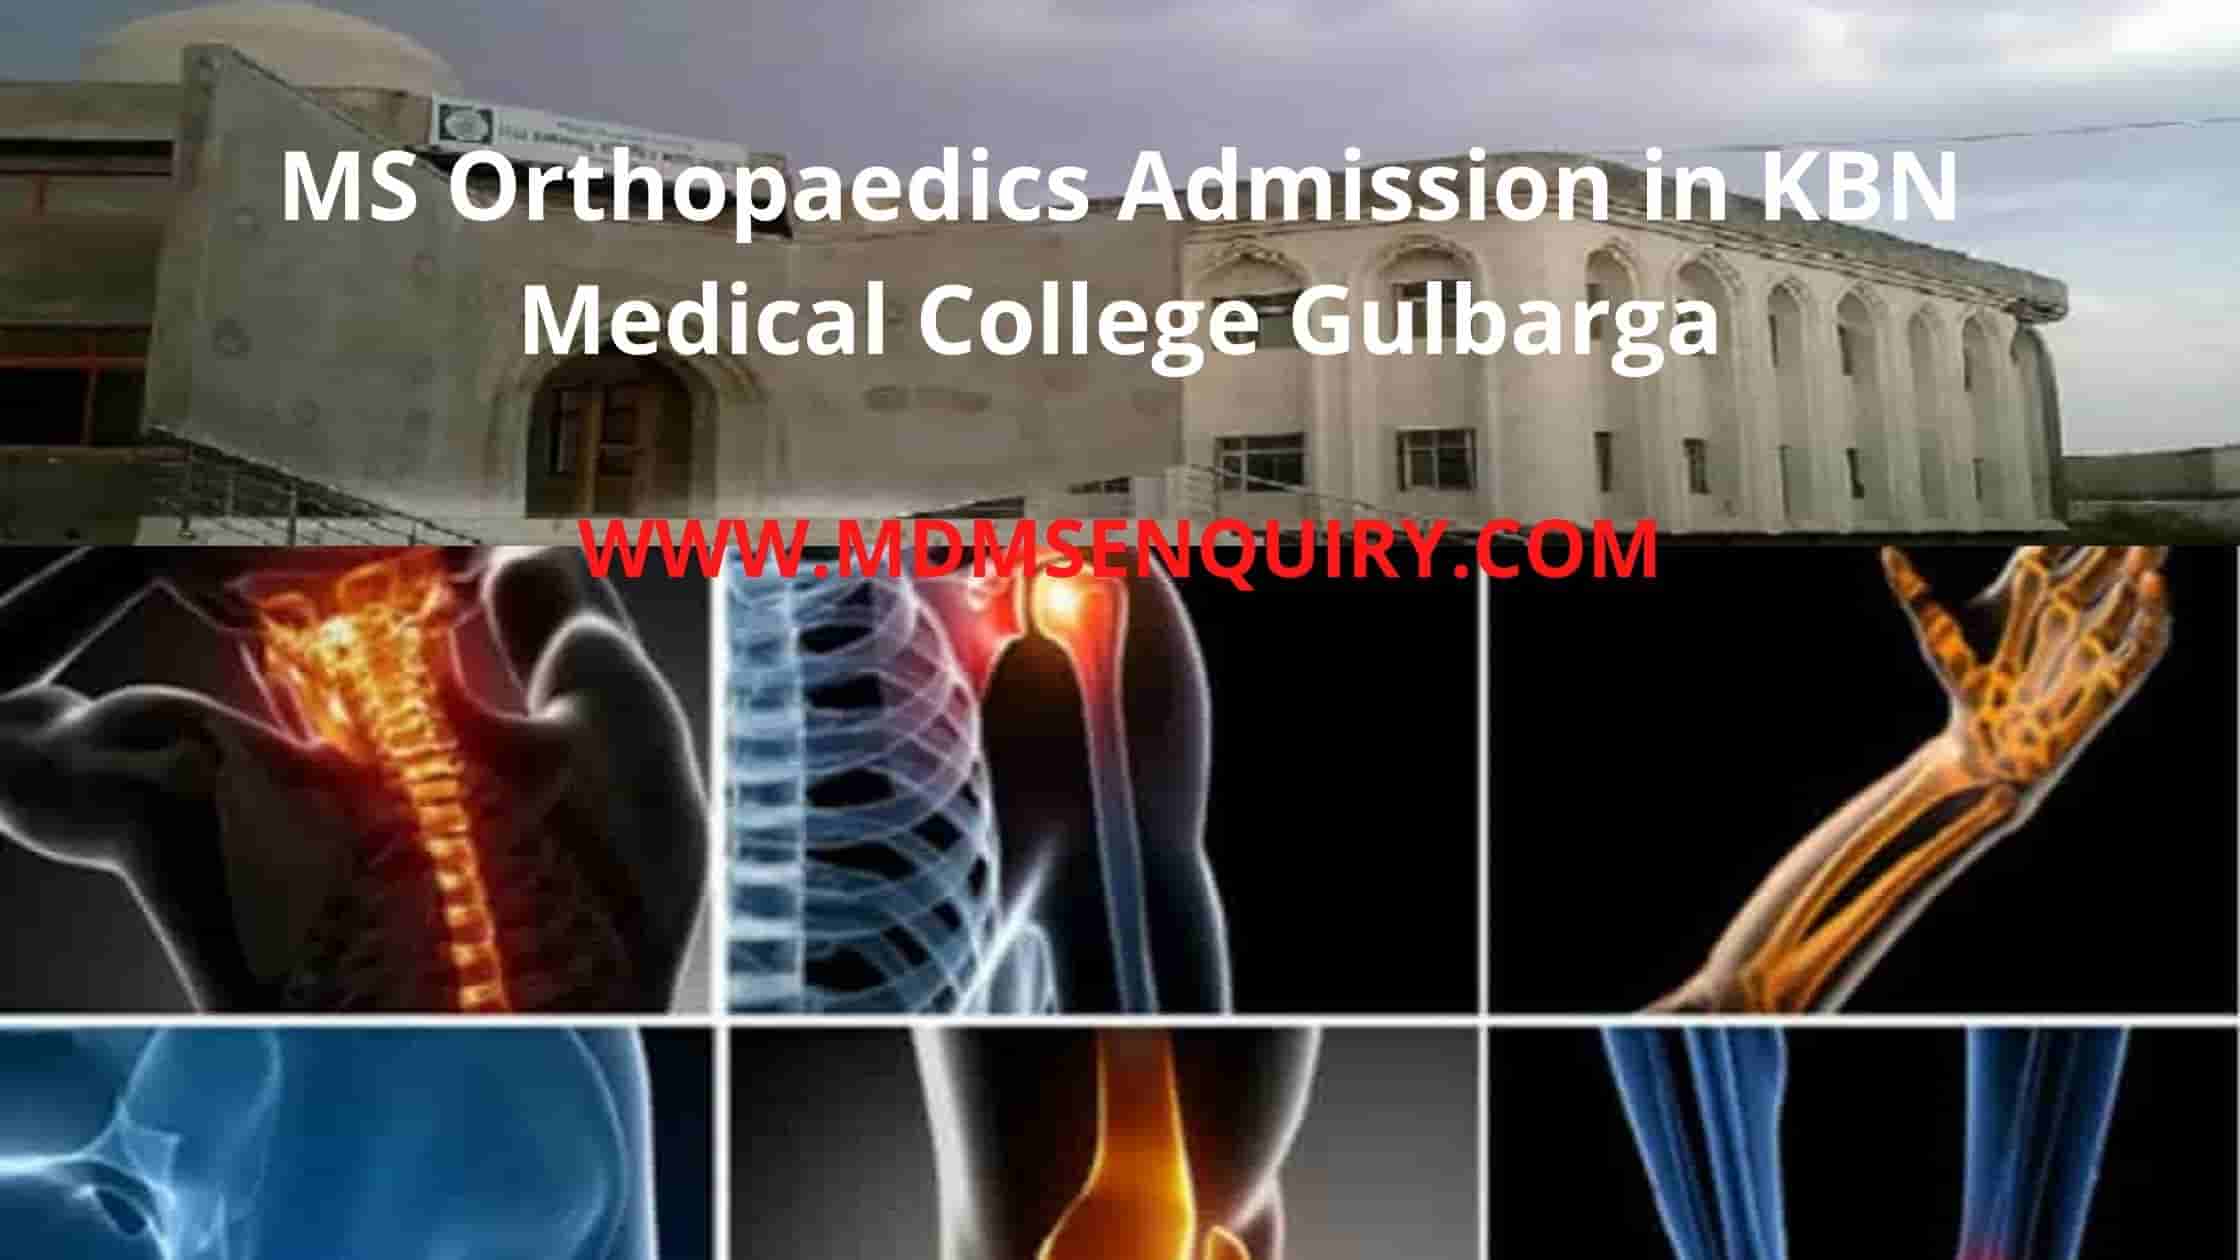 MS Orthopaedics Admission in KBN Medical College Gulbarga